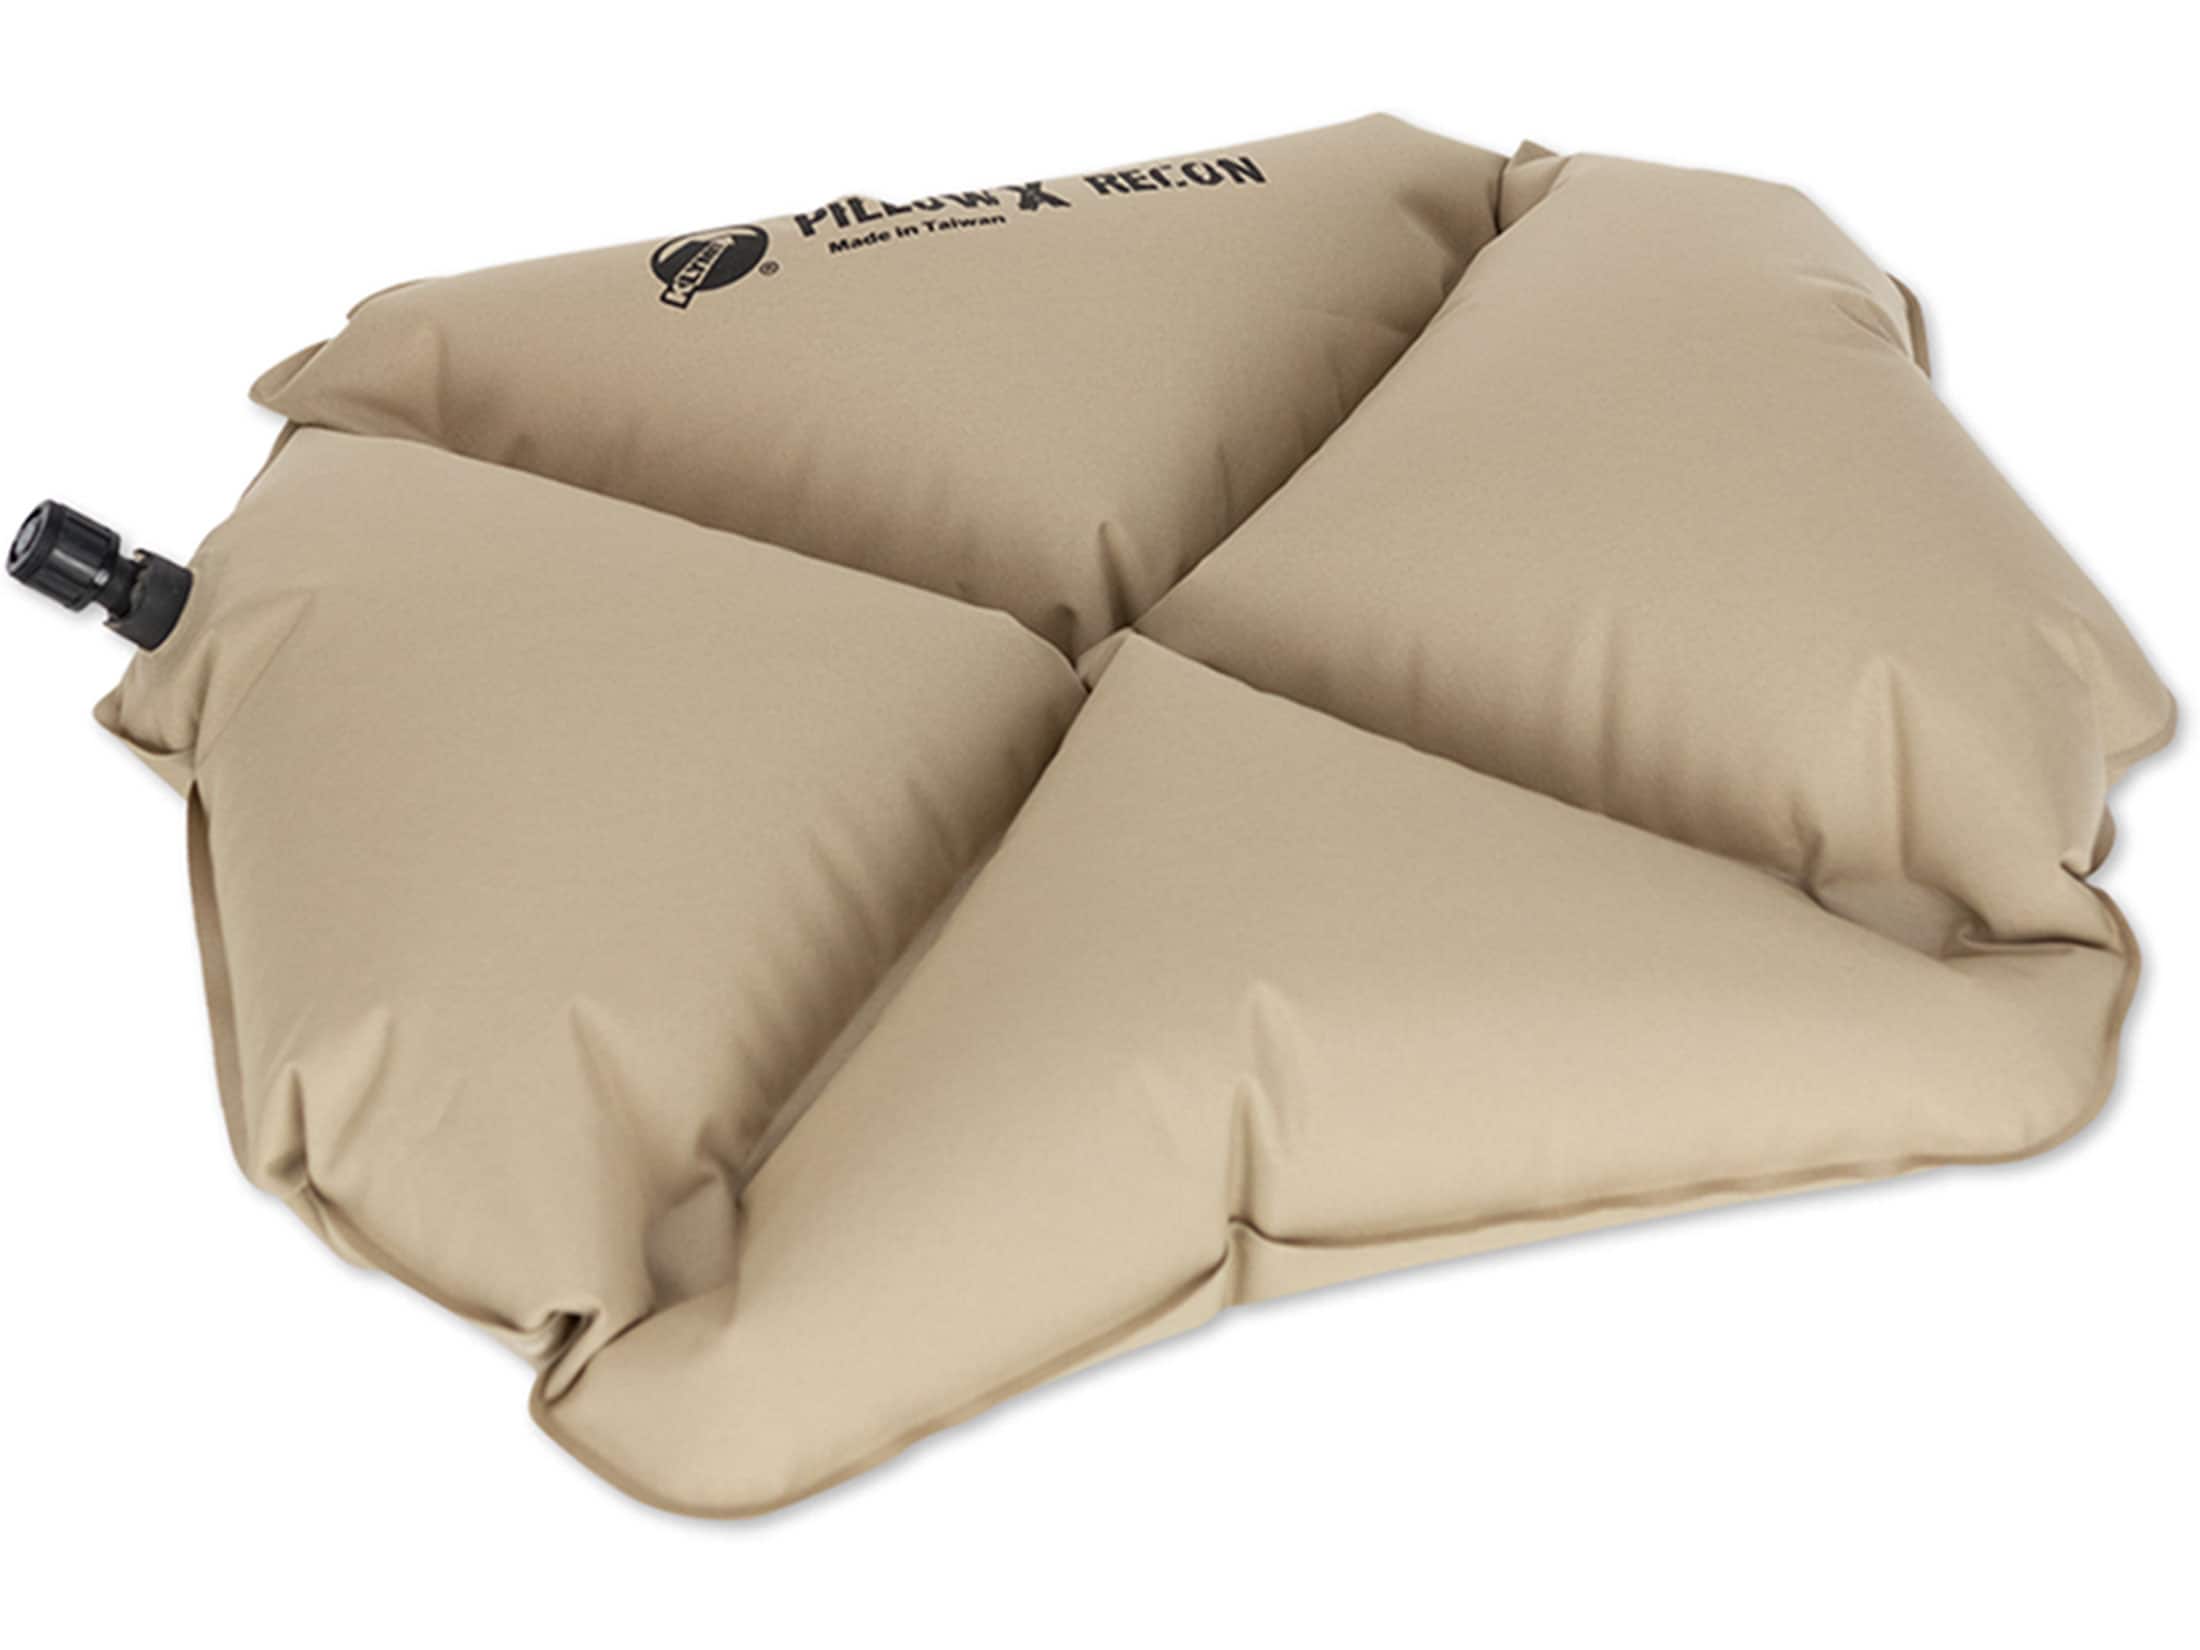 klymit v inflatable air mattress